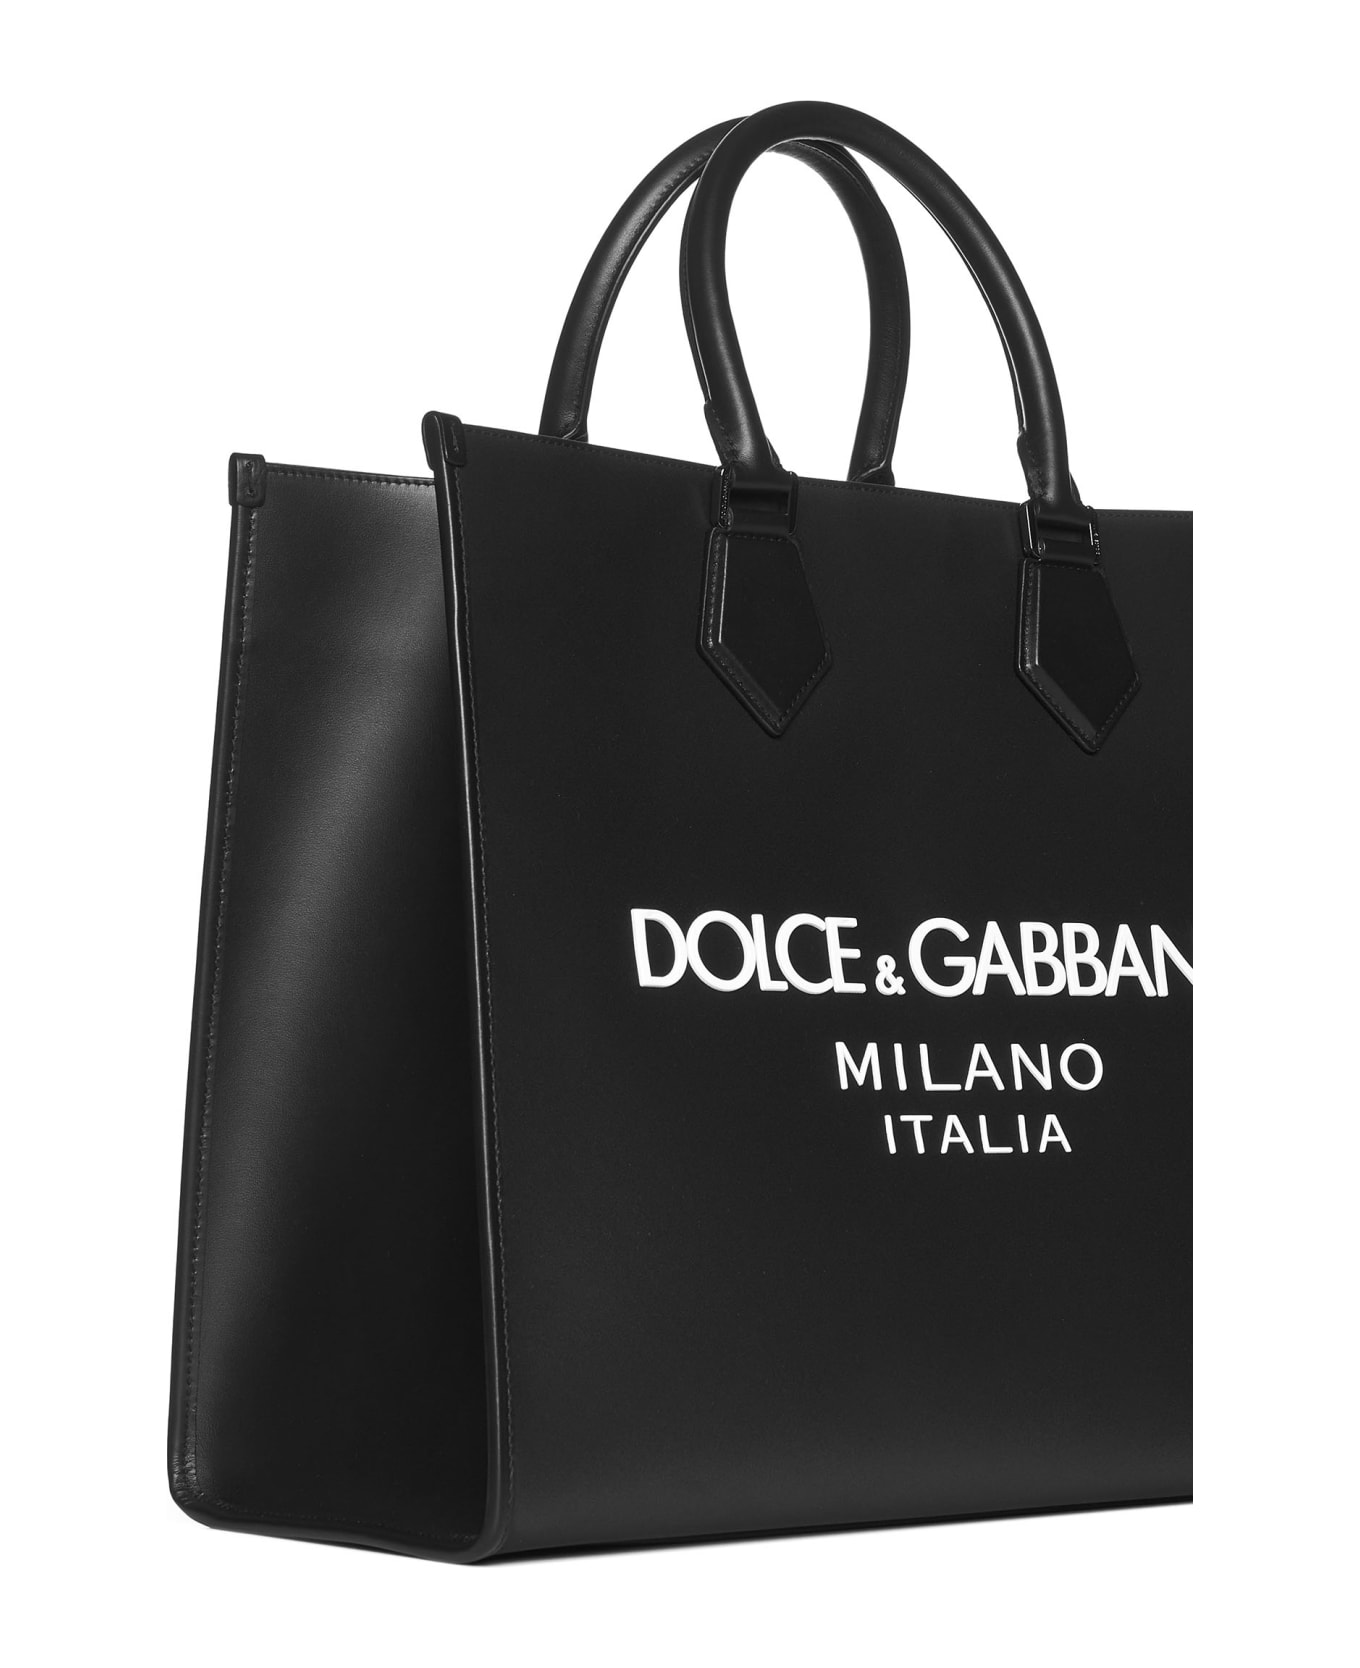 Dolce & Gabbana Tote - Black